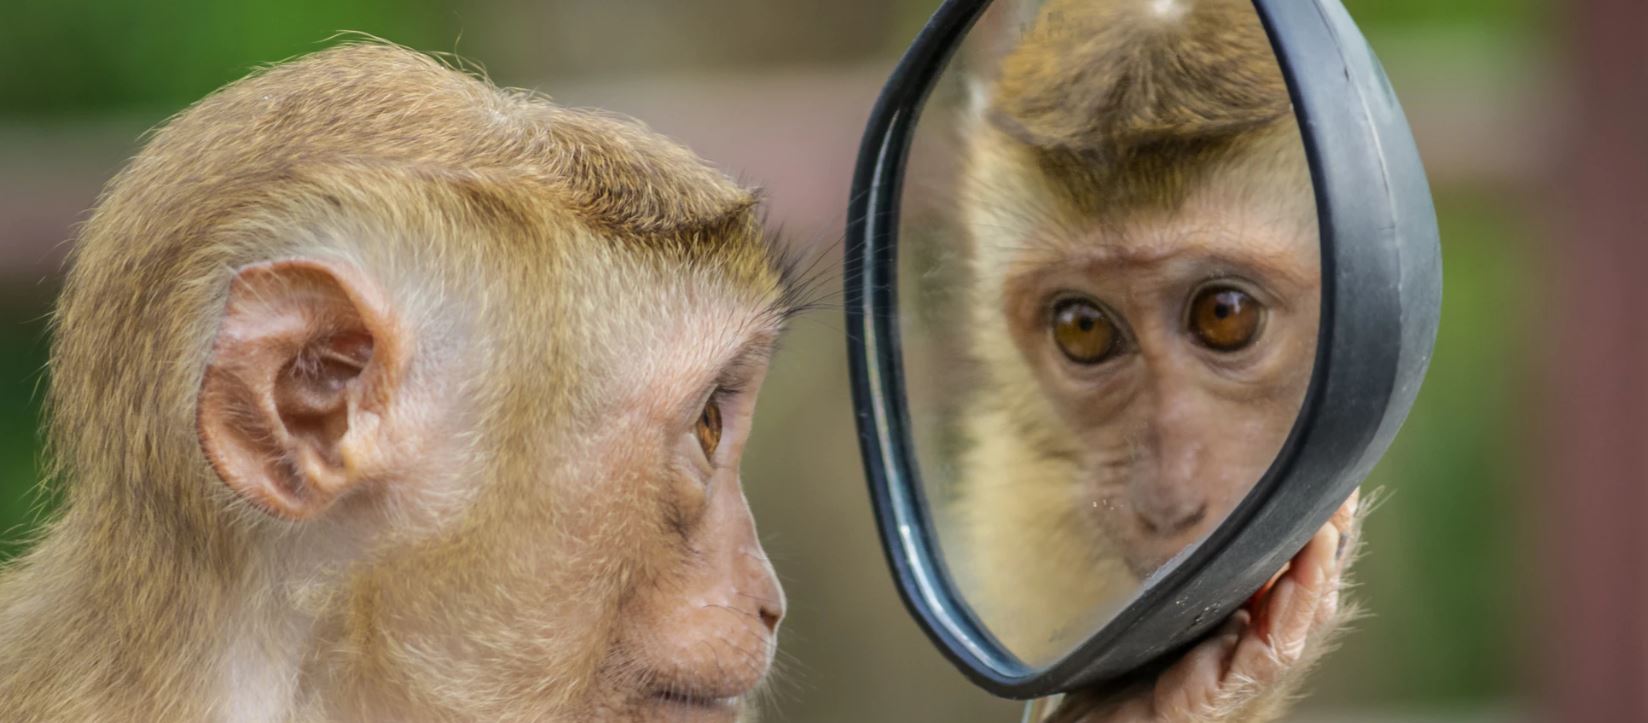 mirror monkey